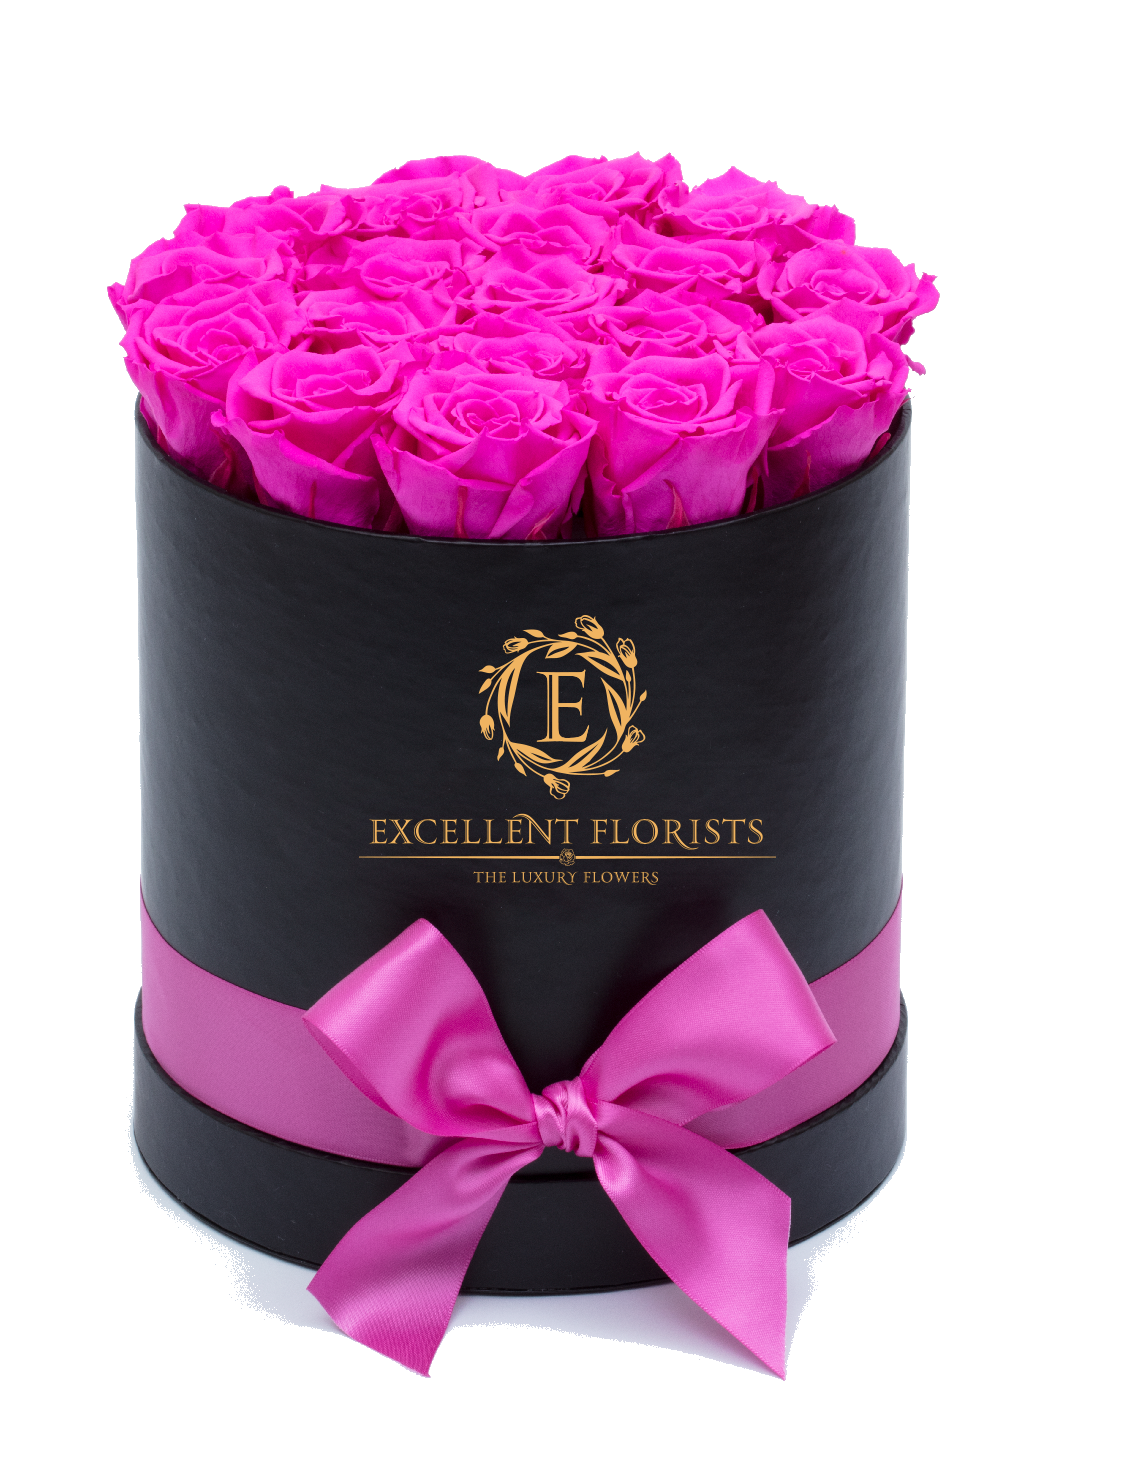 Hot Pink Preserved Roses - Excellent Florists 